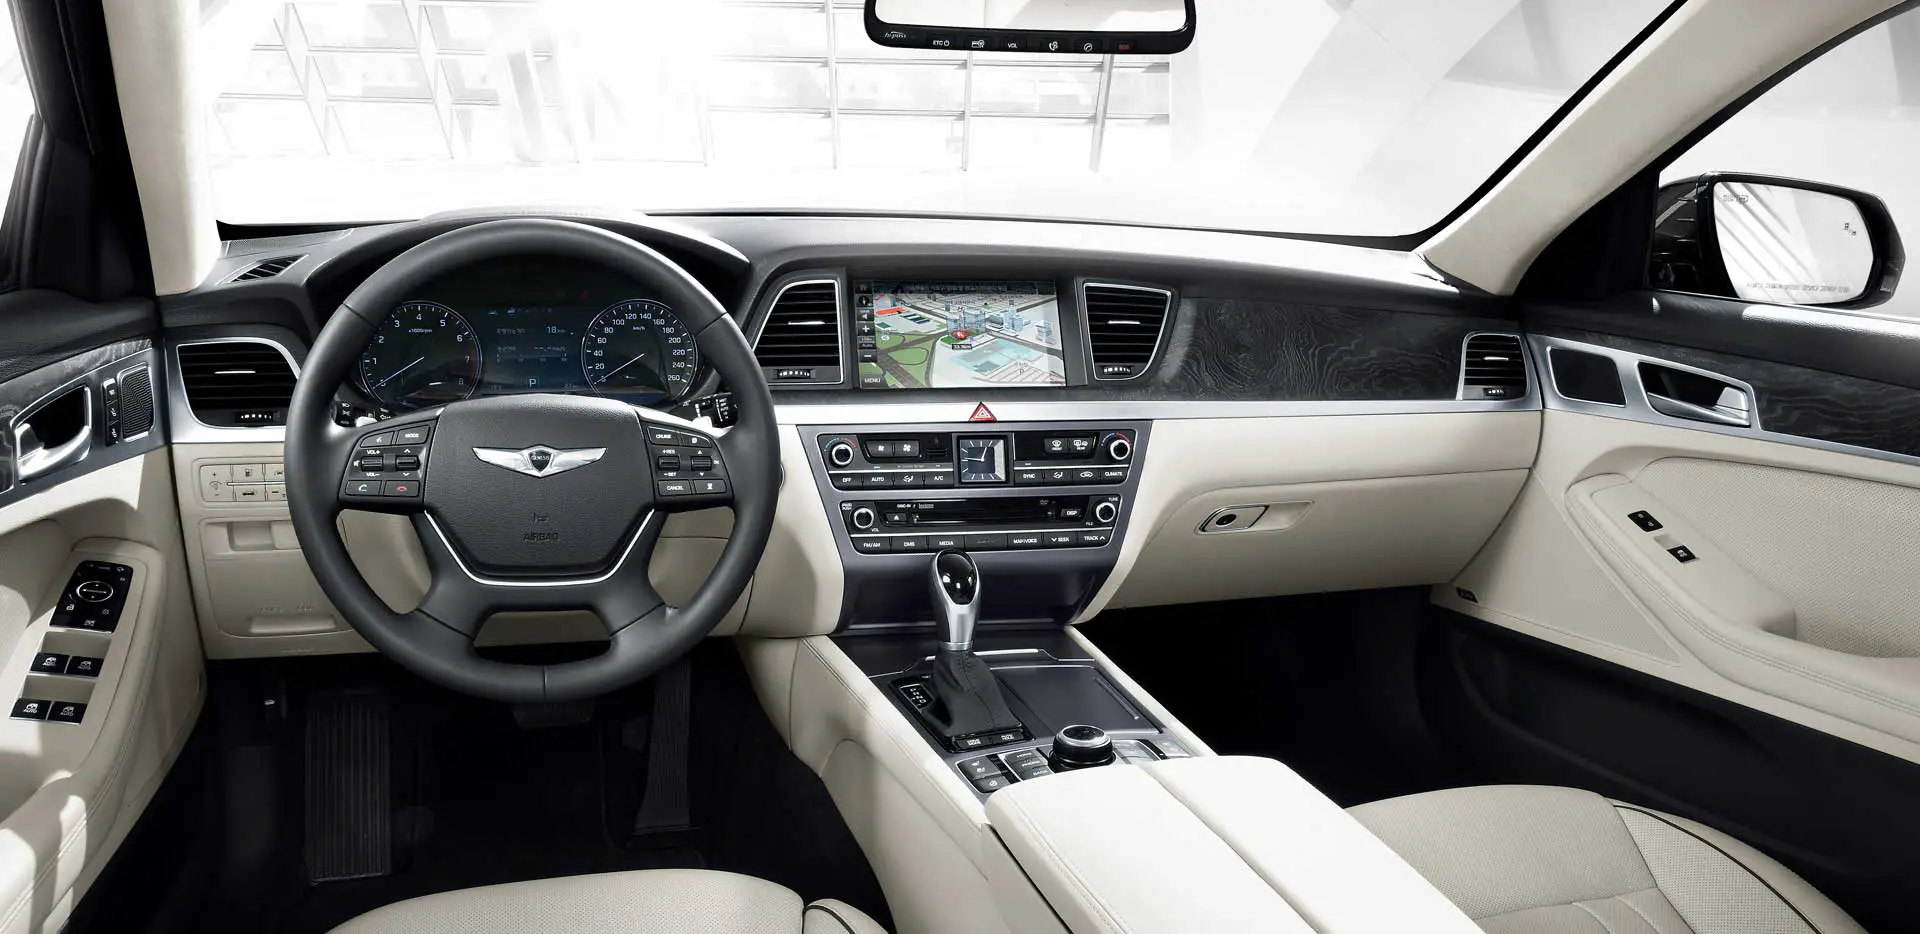 Hyundai Genesis 5.0 Interior Steering